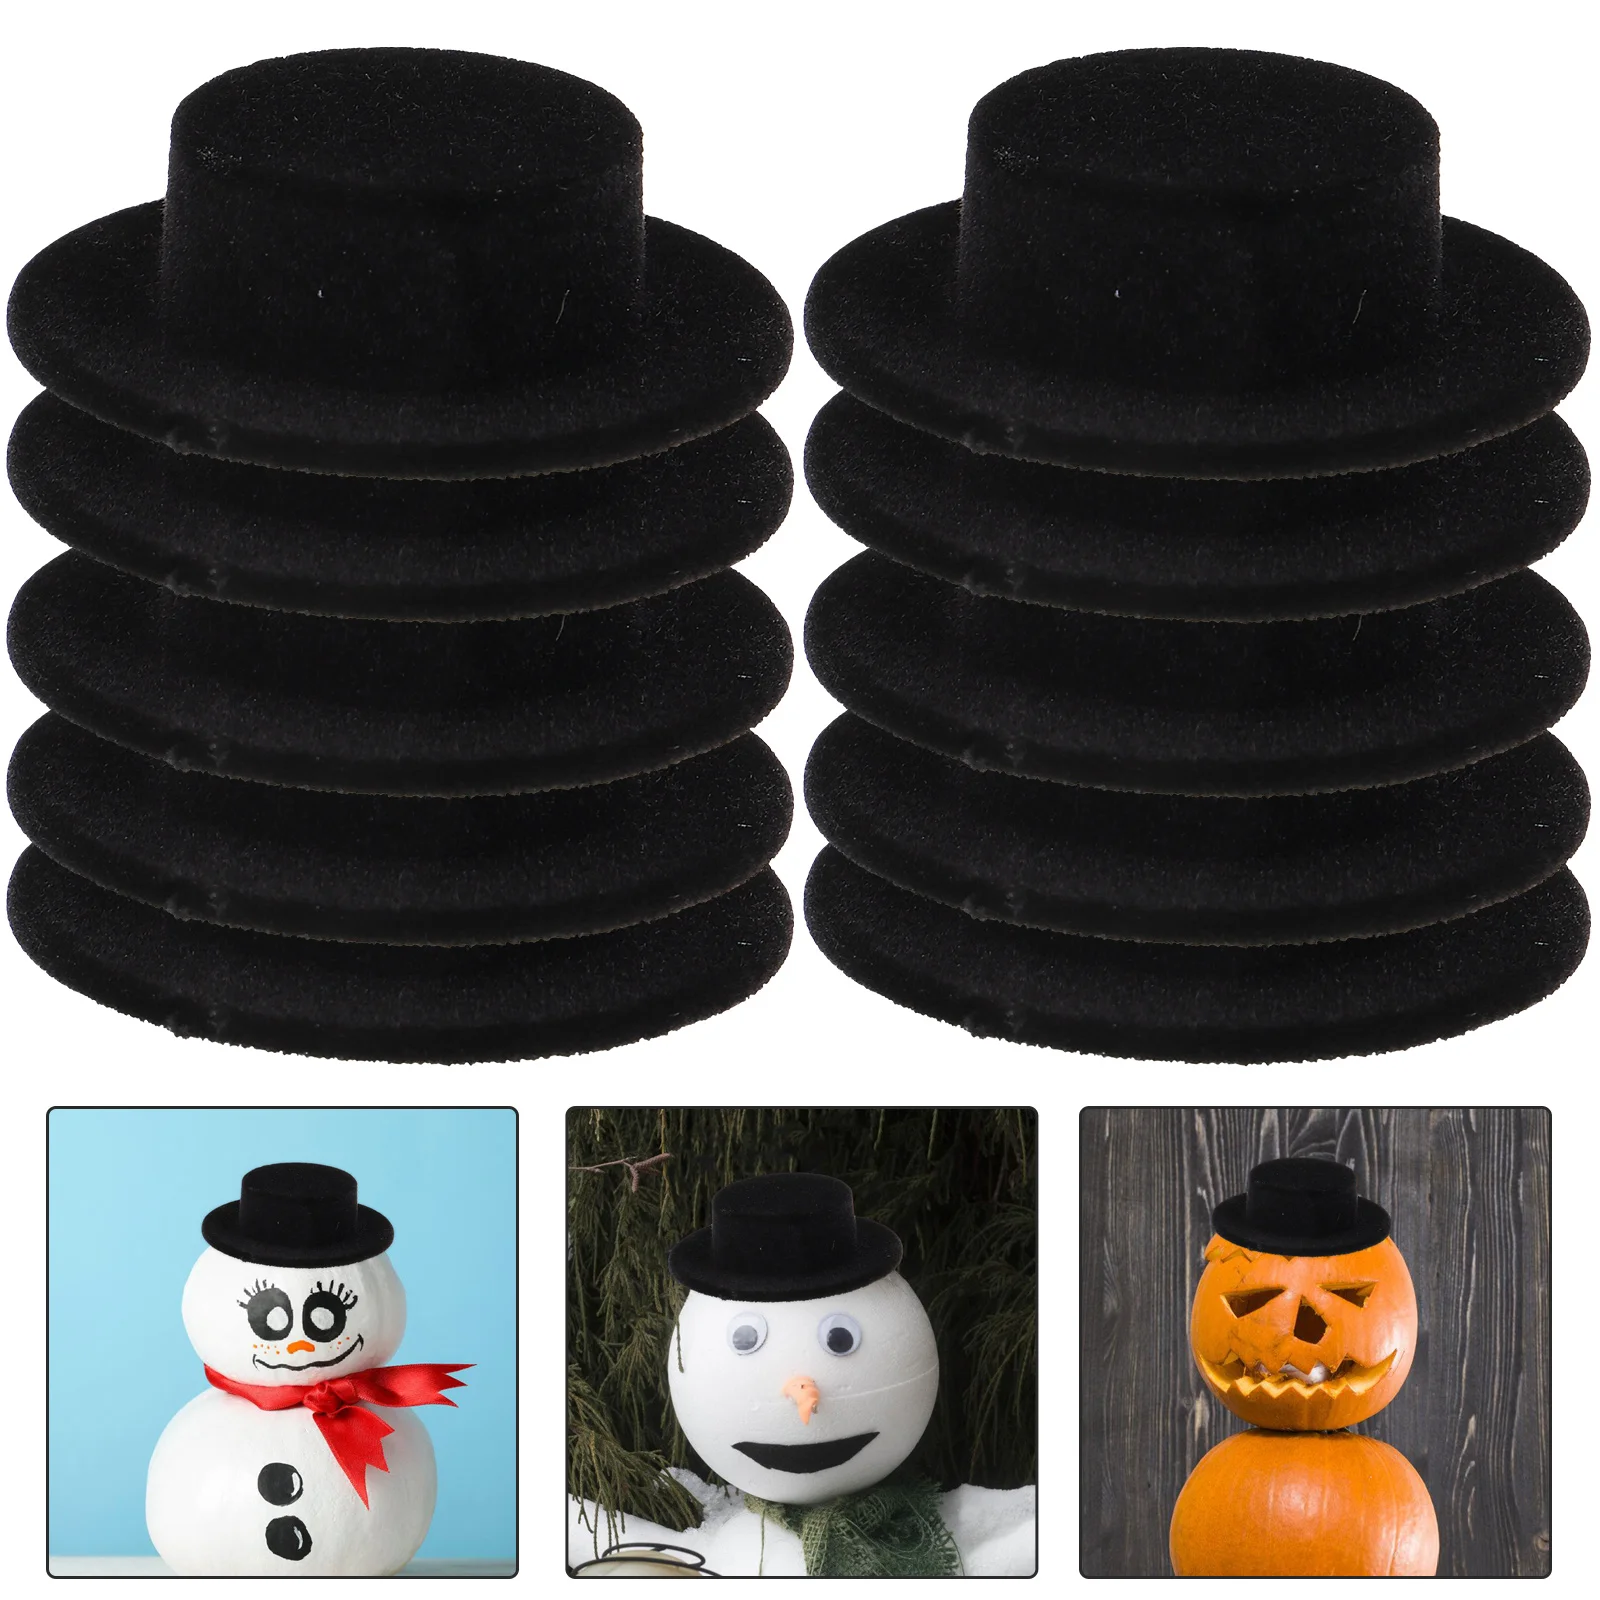 

Mini Top Hats Black Plastic Miniature Top Hats Cupcake Toppers Wine Bottle Cover Decoration Crafts Christmas Snowman Hats